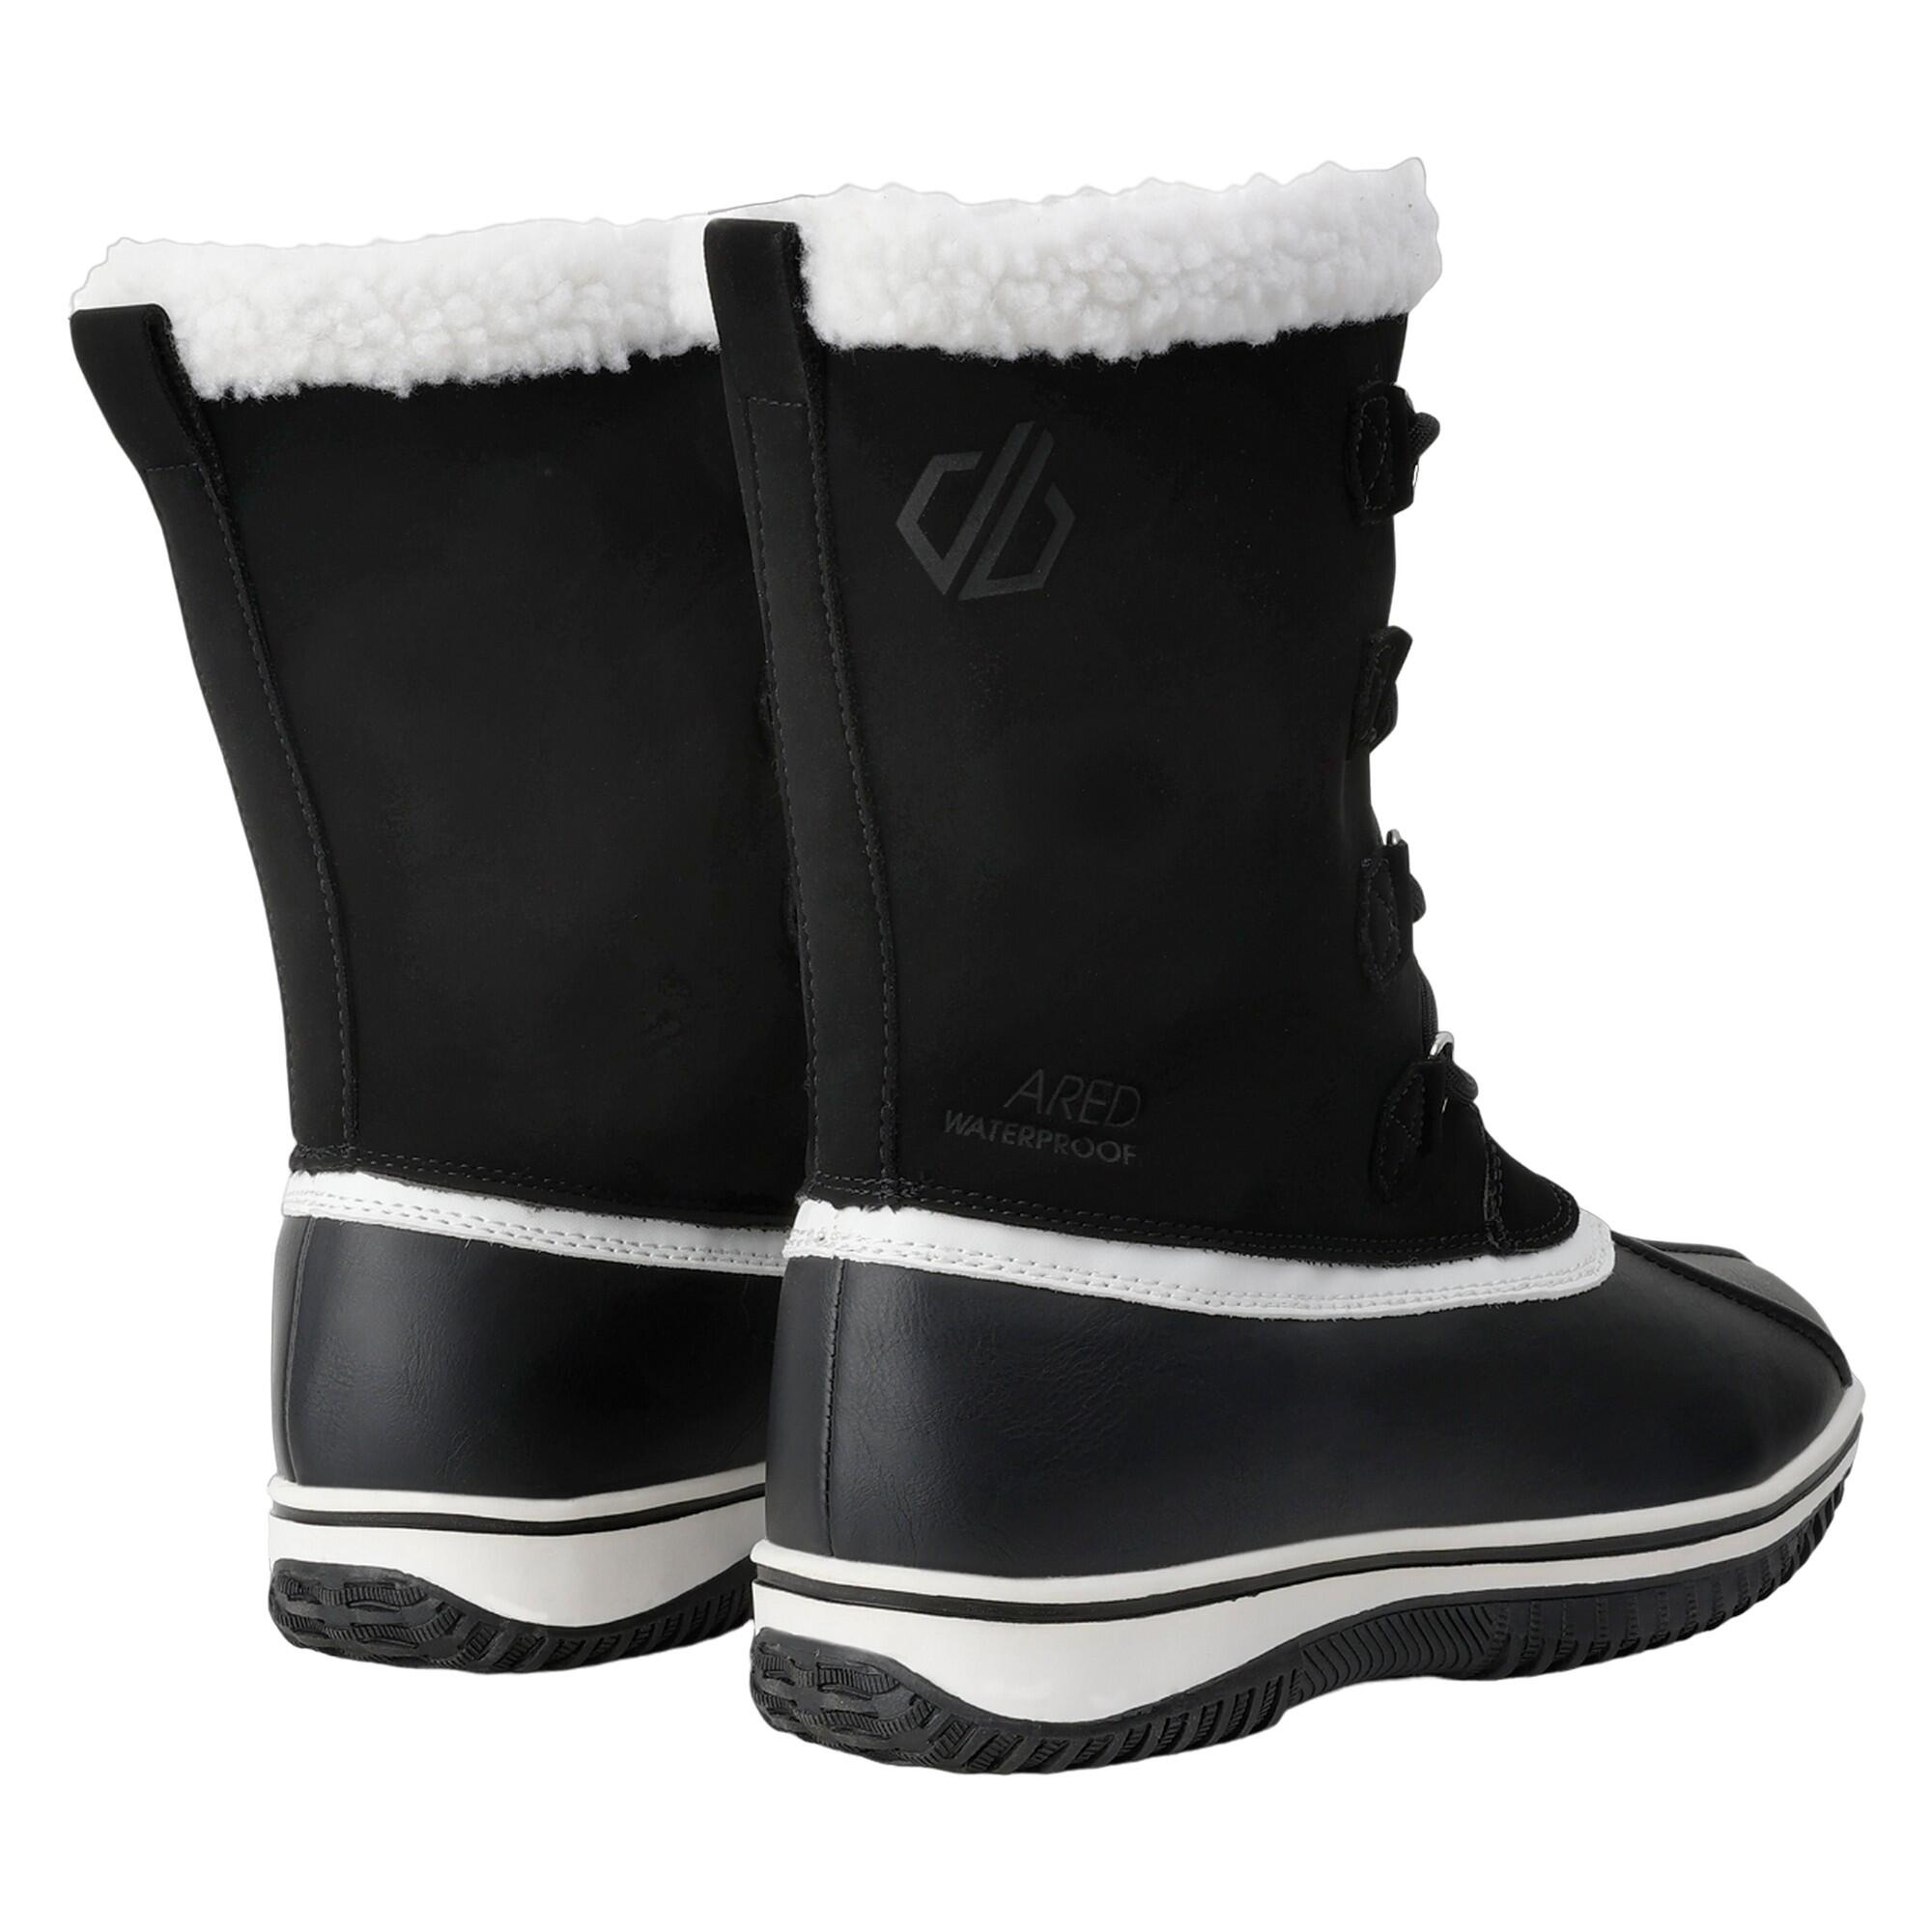 Womens/Ladies Northstar Snow Boots (Black/White) 2/5